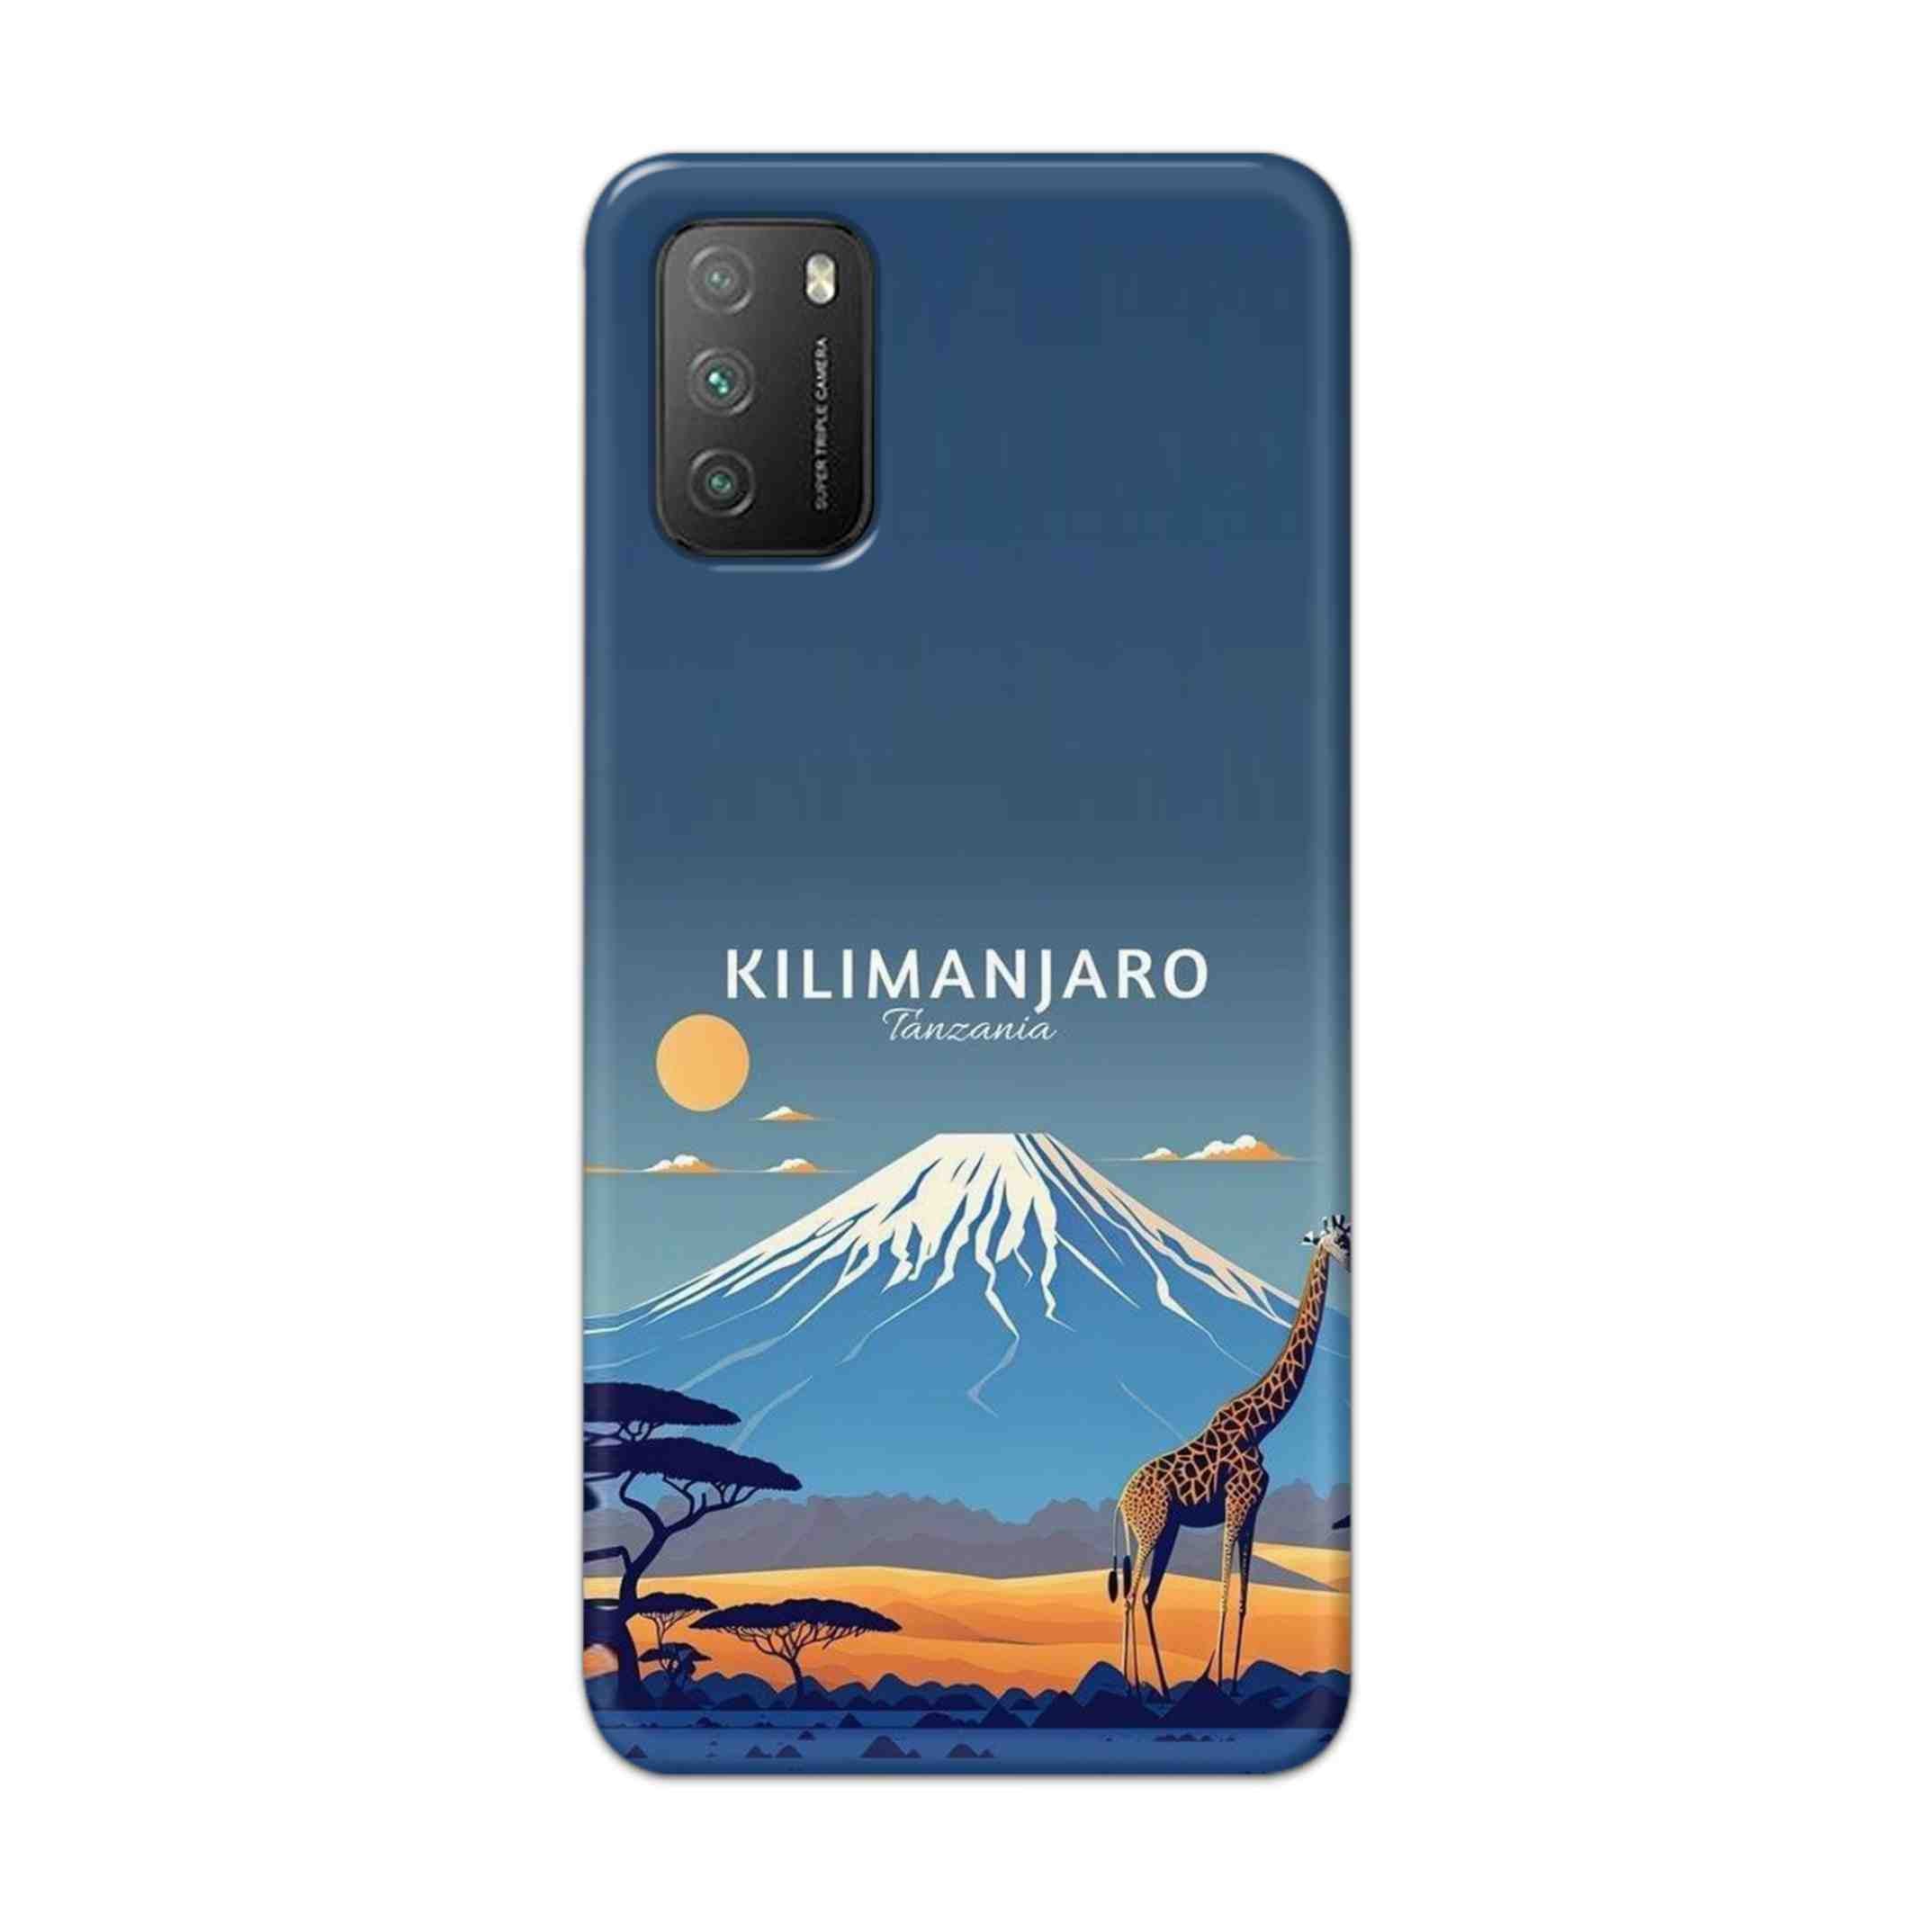 Buy Kilimanjaro Hard Back Mobile Phone Case Cover For Poco M3 Online